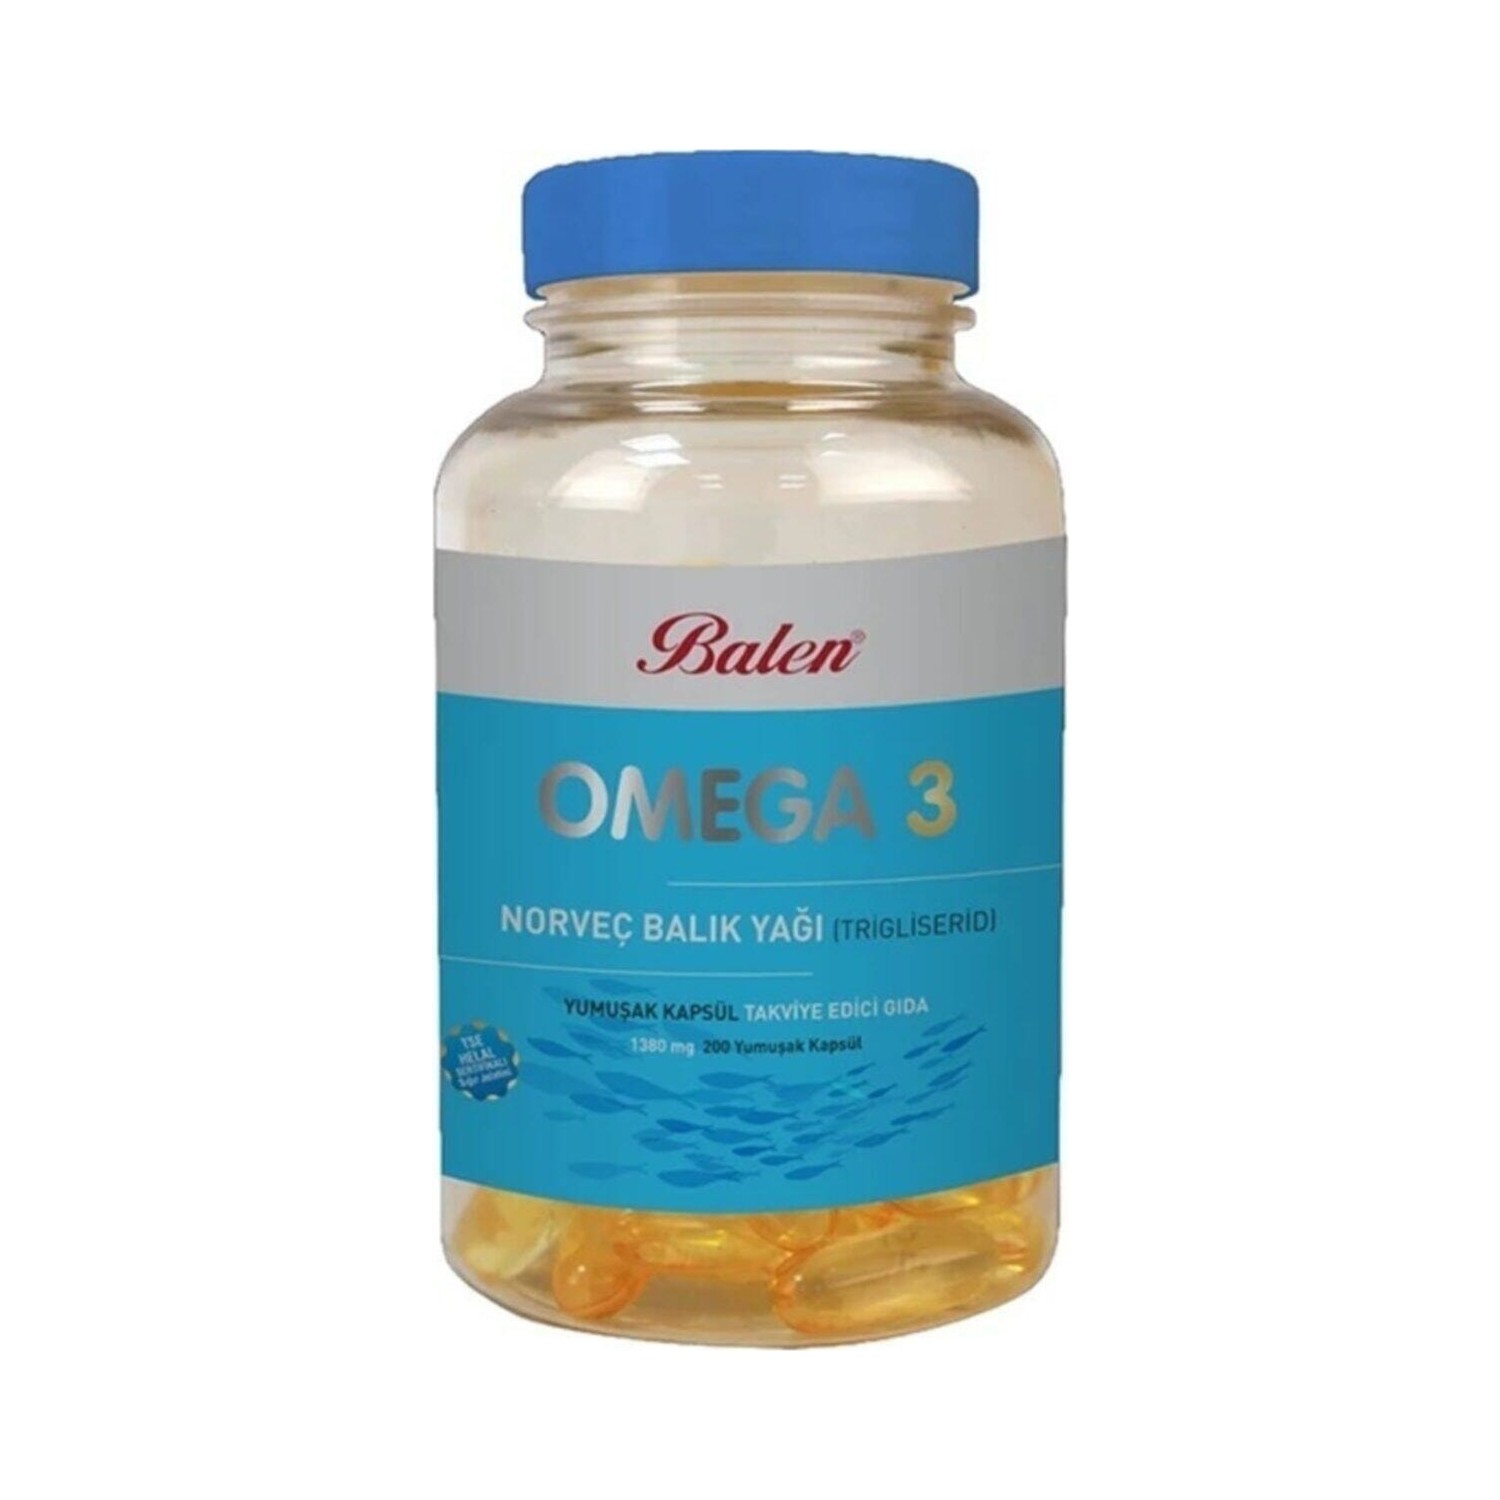 Рыбий жир Balen Omega 3, 200 капсул, 1380 мг рыбий жир balen omega 3 1380мг 200 капсул 3шт